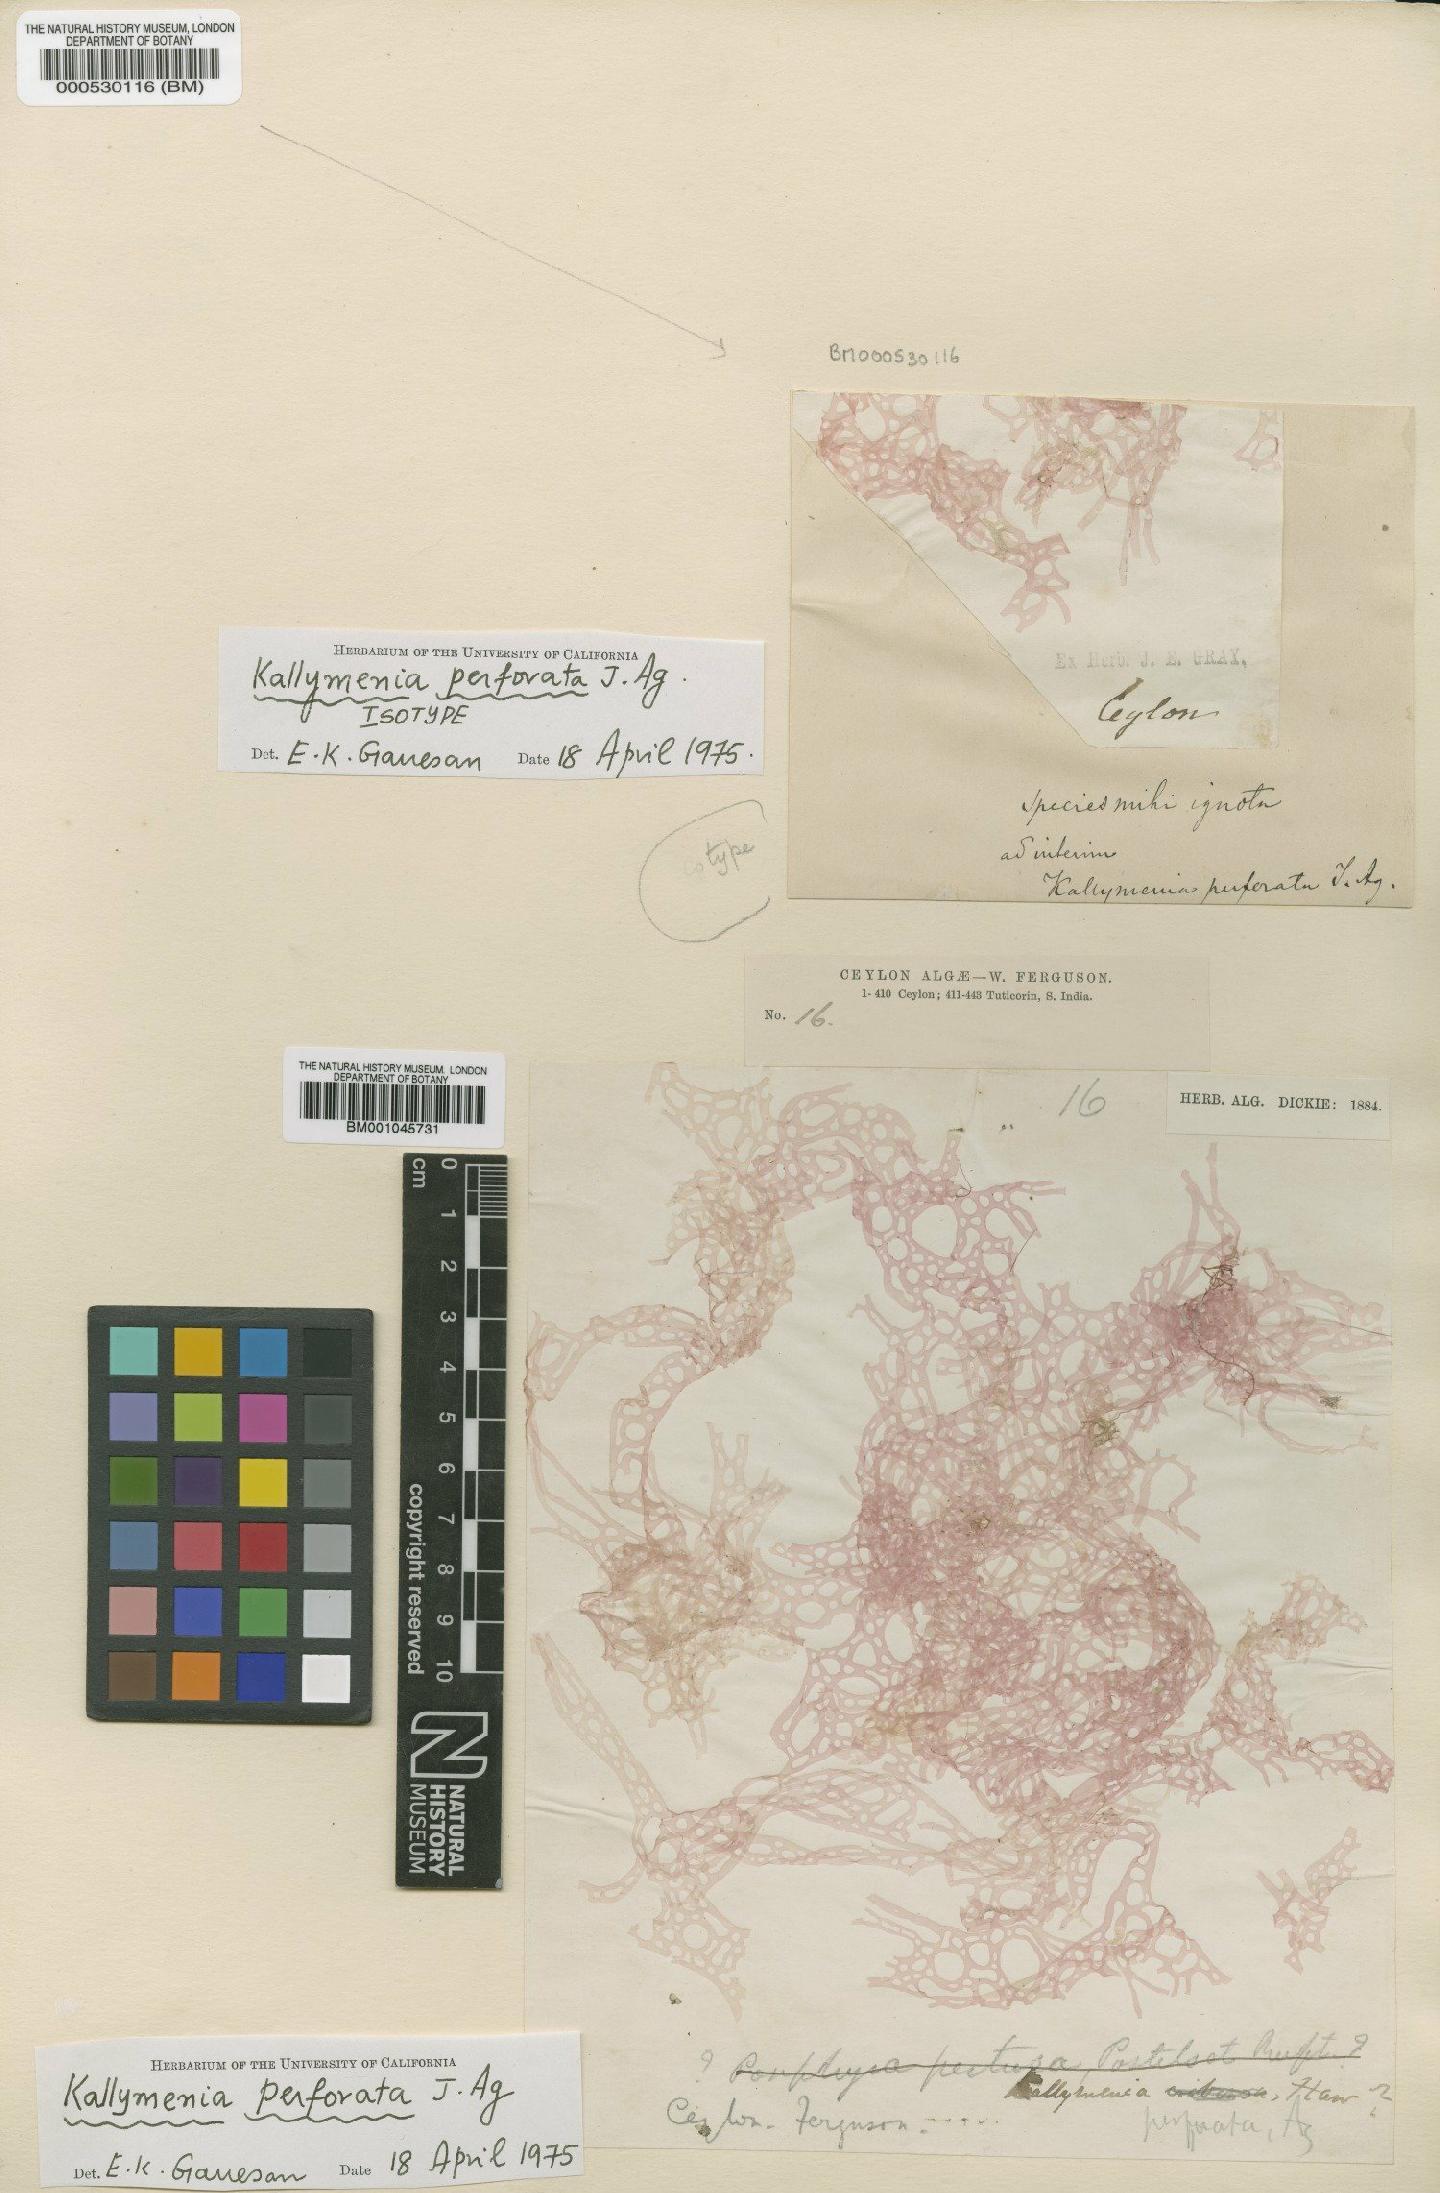 To NHMUK collection (Kallymenia perforata Agardh; Isotype; NHMUK:ecatalogue:746629)